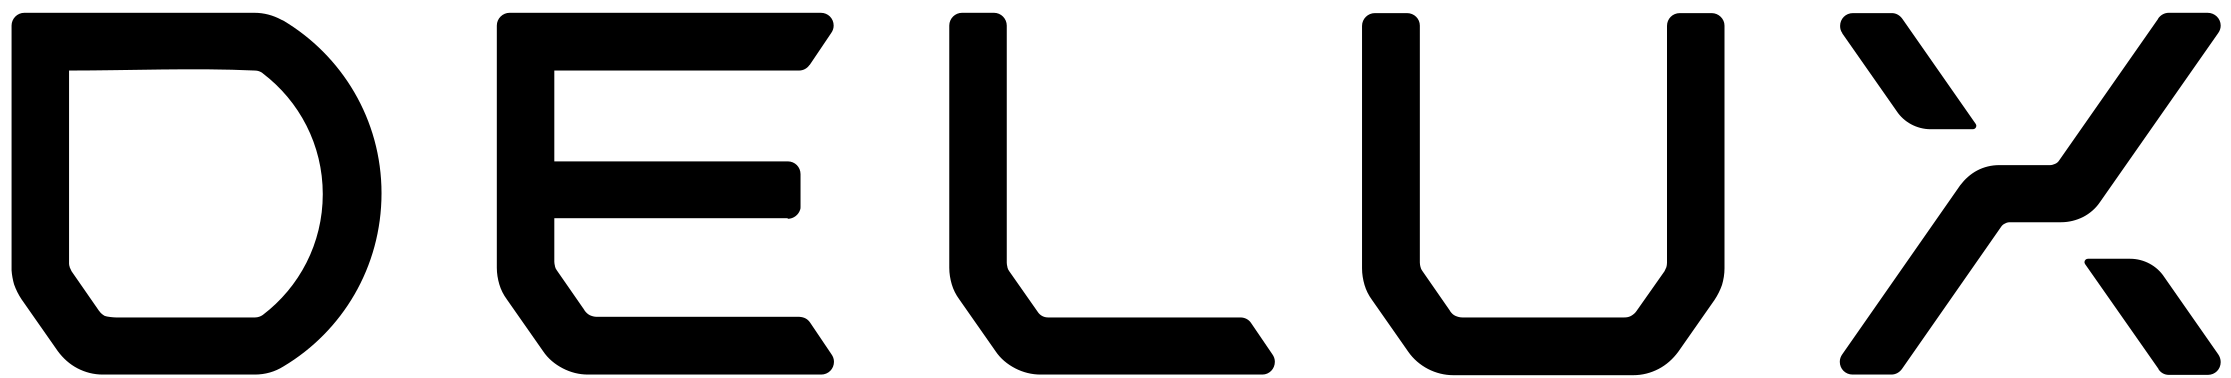 delux logo